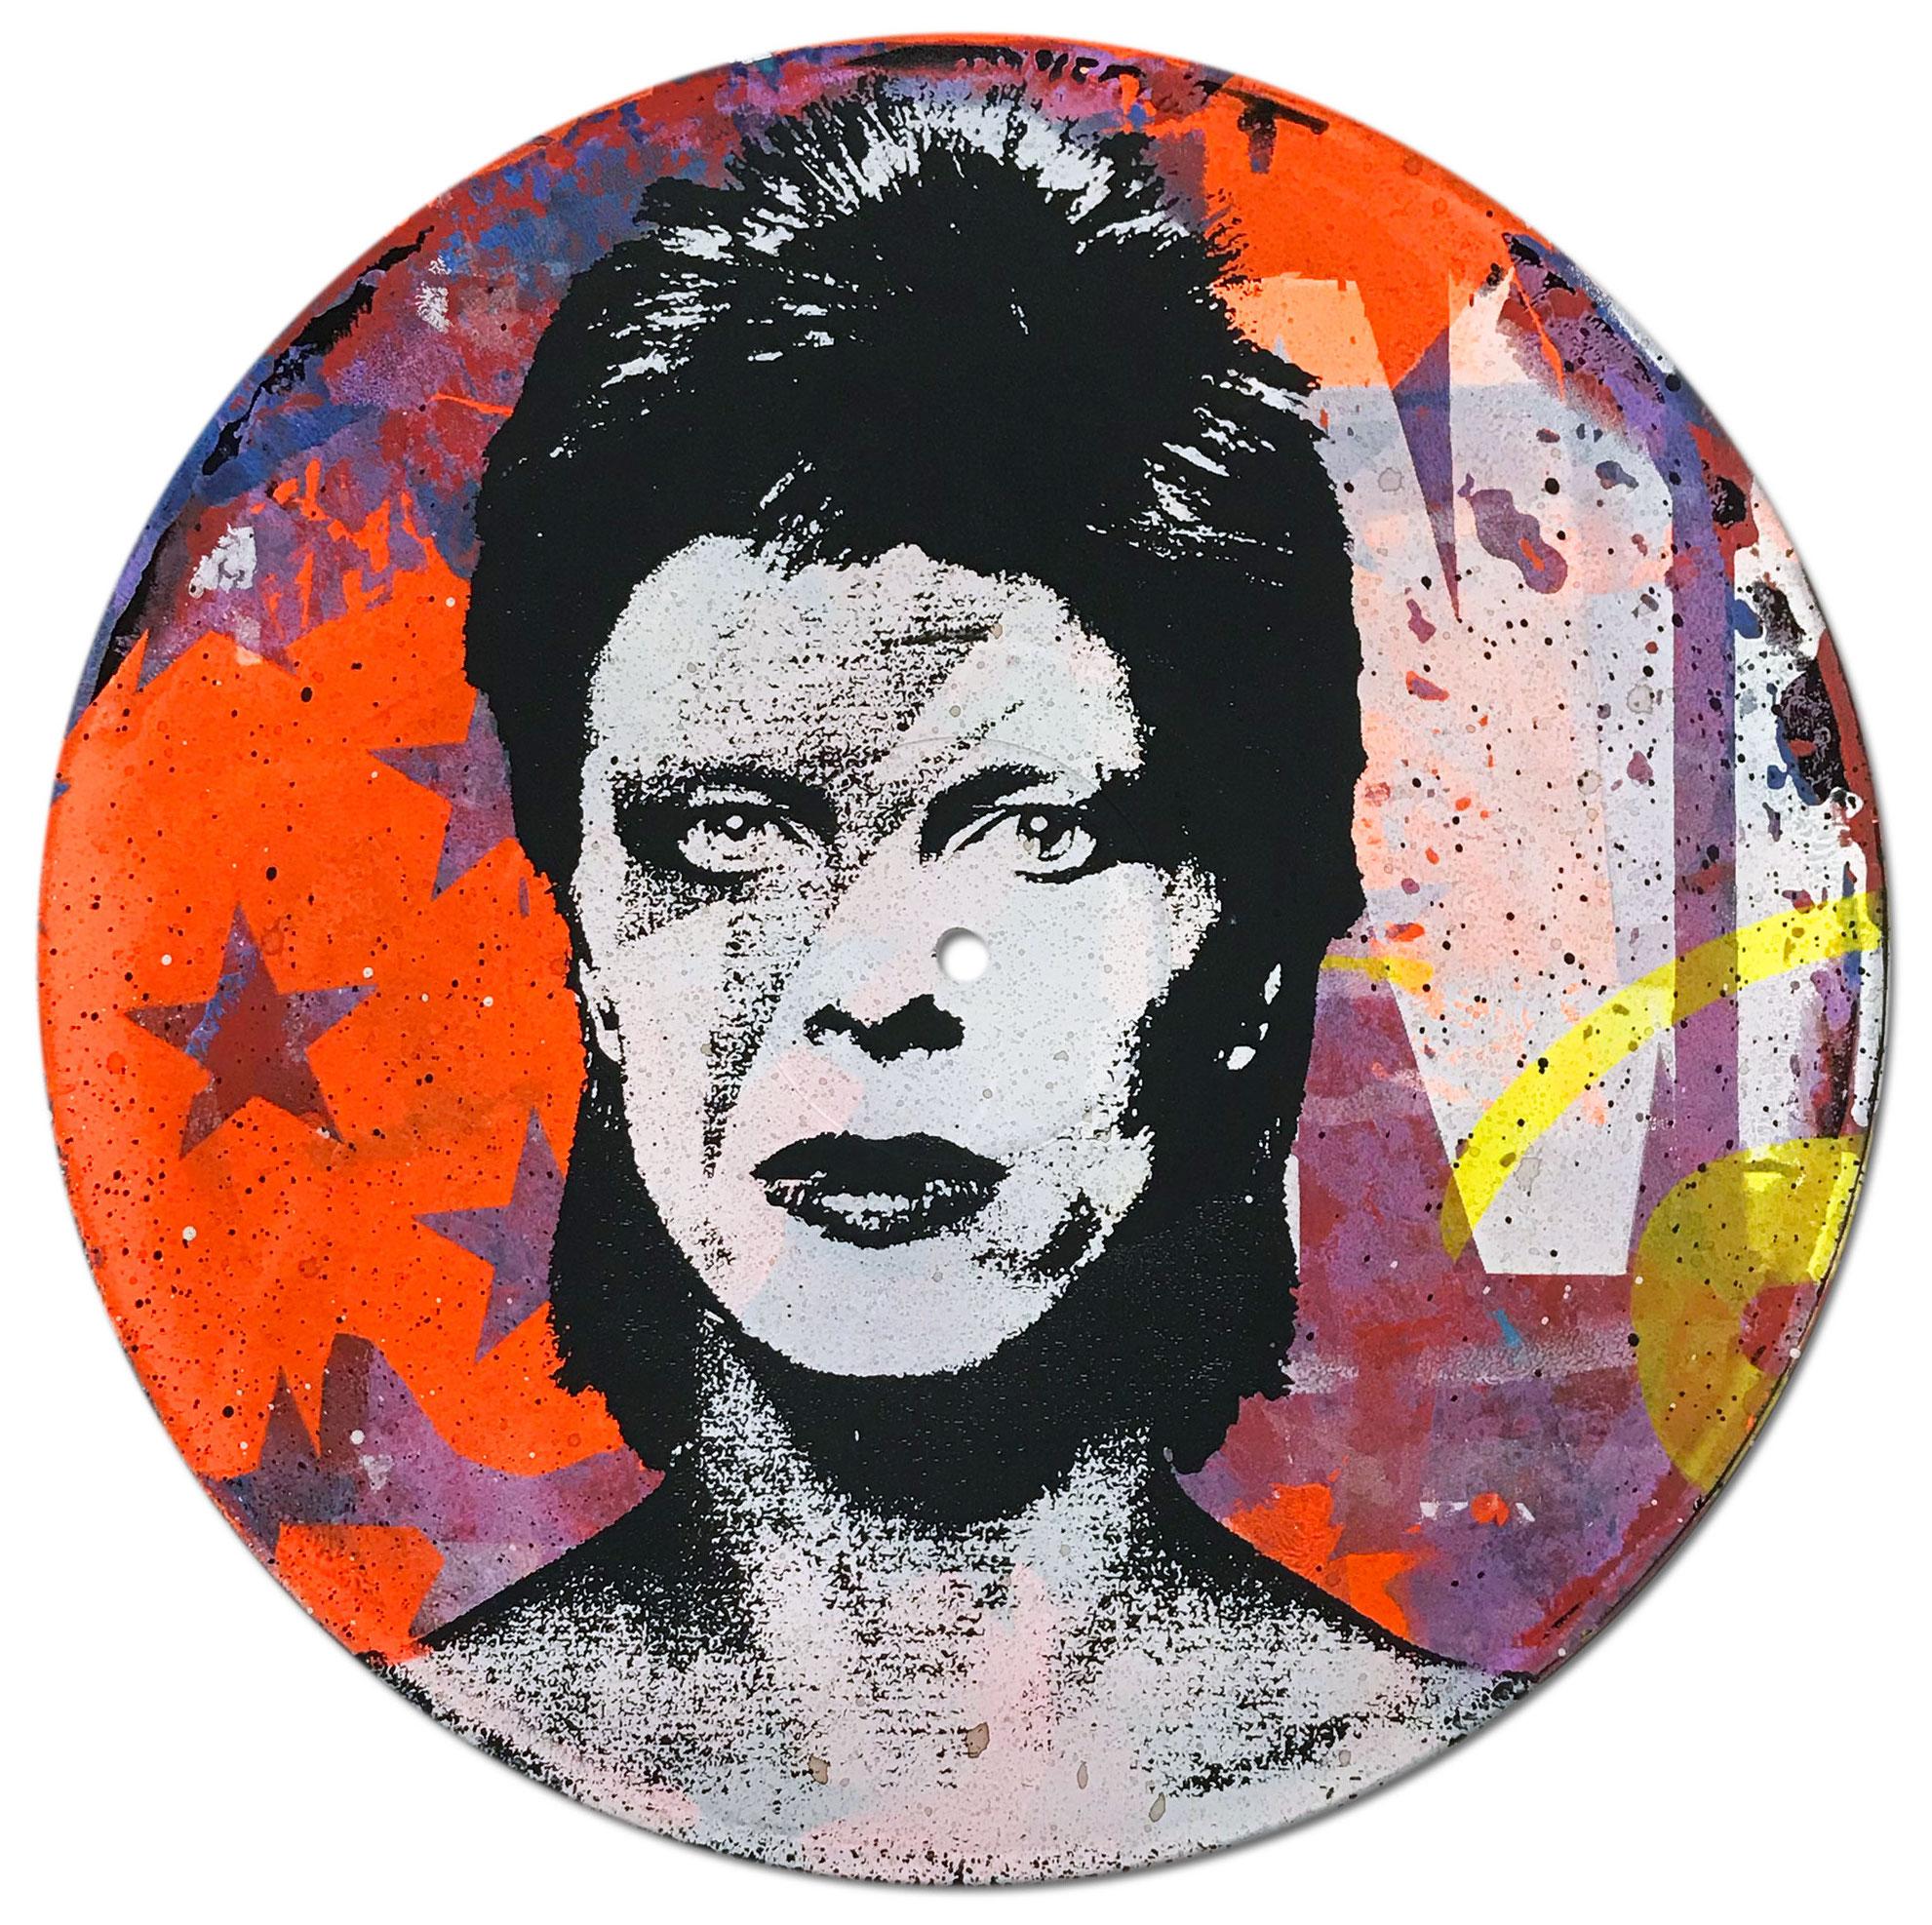 David Bowie Vinyl 1-10, Greg Gossel Pop Art LP Record (Singles & Sets Available) For Sale 6